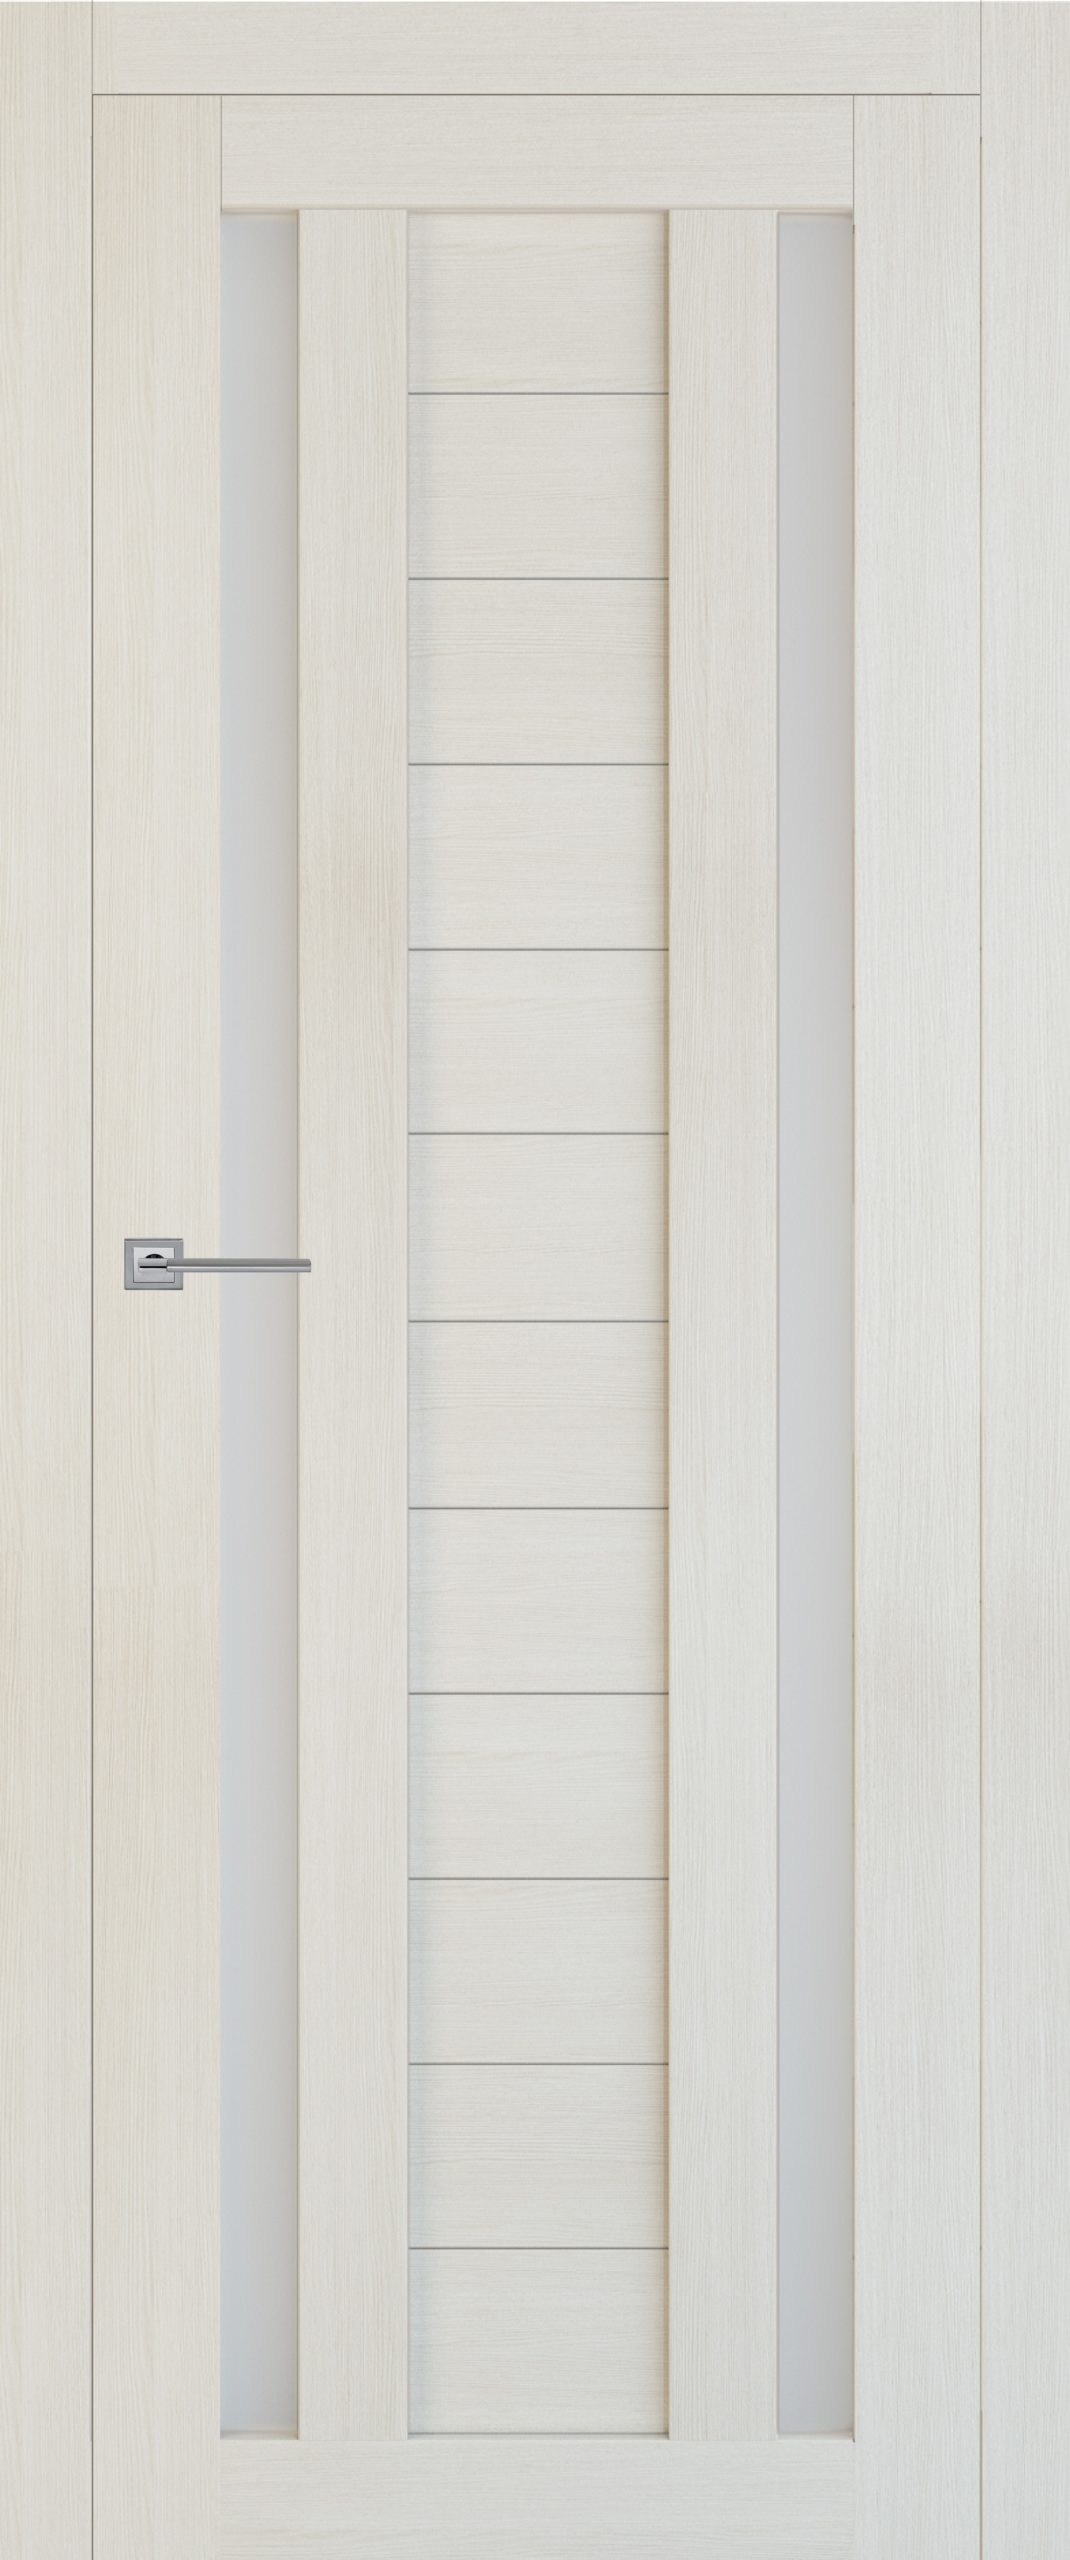 Межкомнатная дверь Т-6 Беленая лиственница